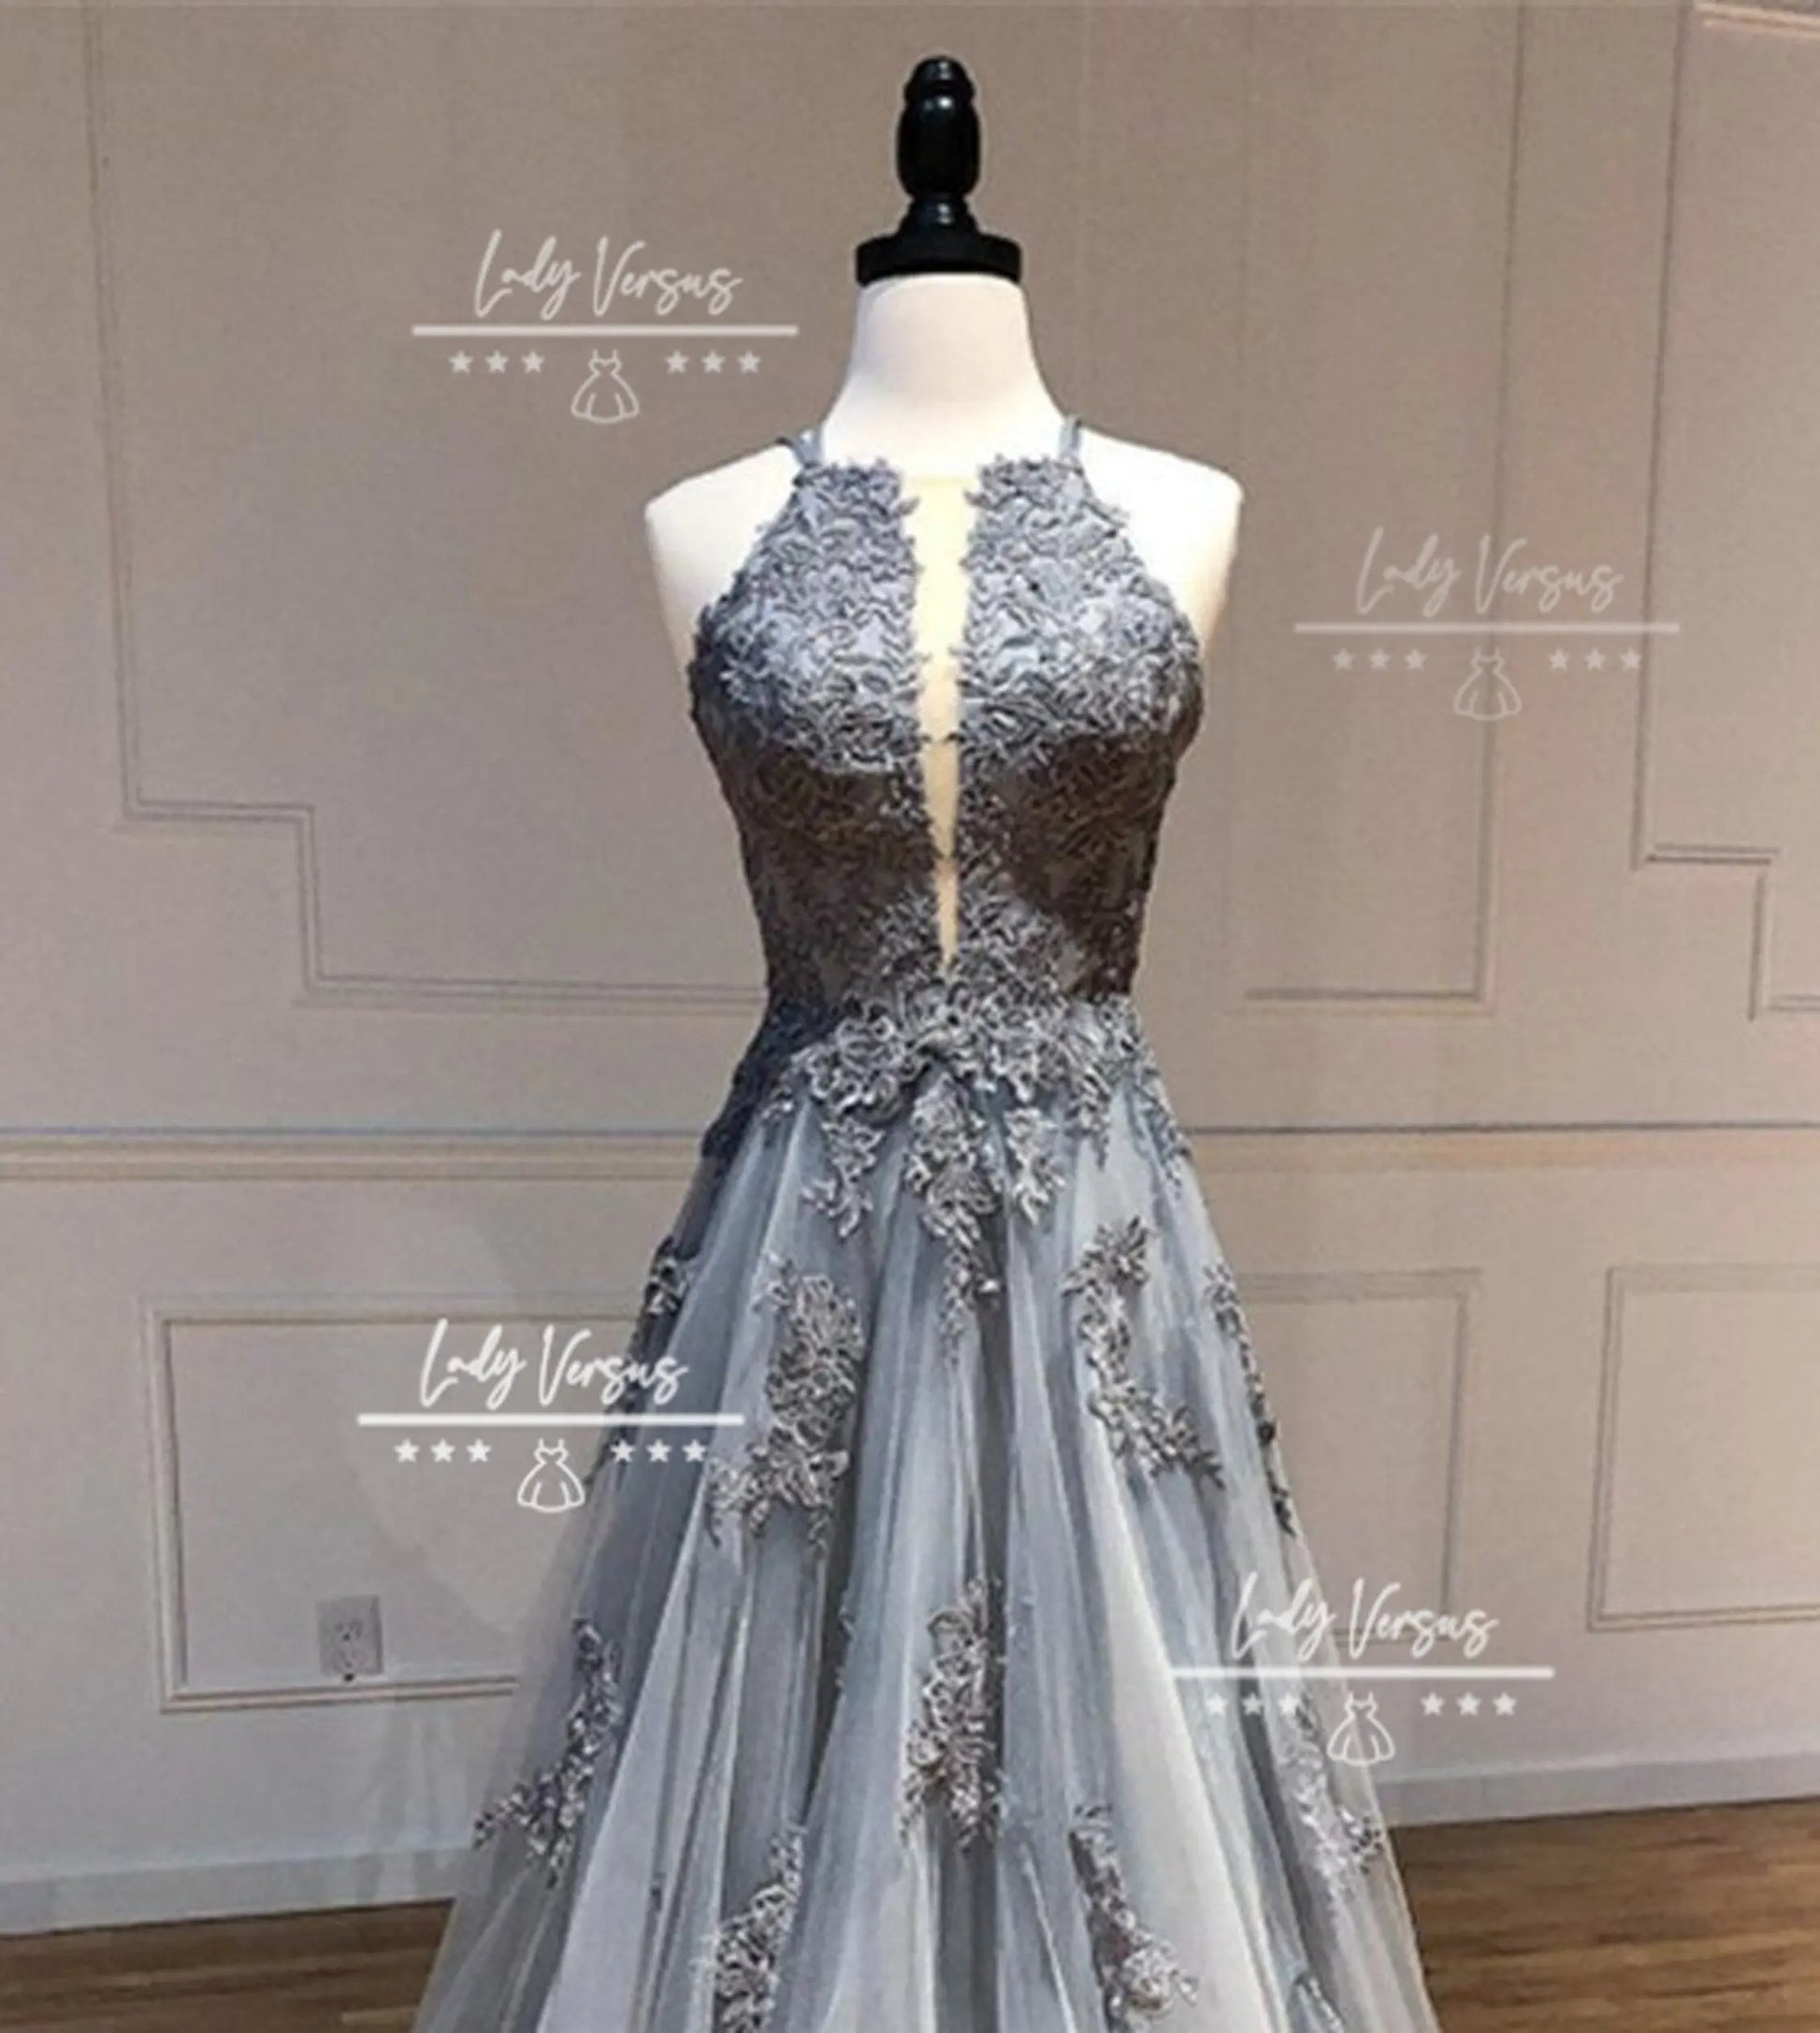 Appliqué flowers Prom/Wedding Dress/Beach wedding dress /bridal gown/ bohemian lace dress/ flower appliqué Prom Dress/Evening gown Lady Versus